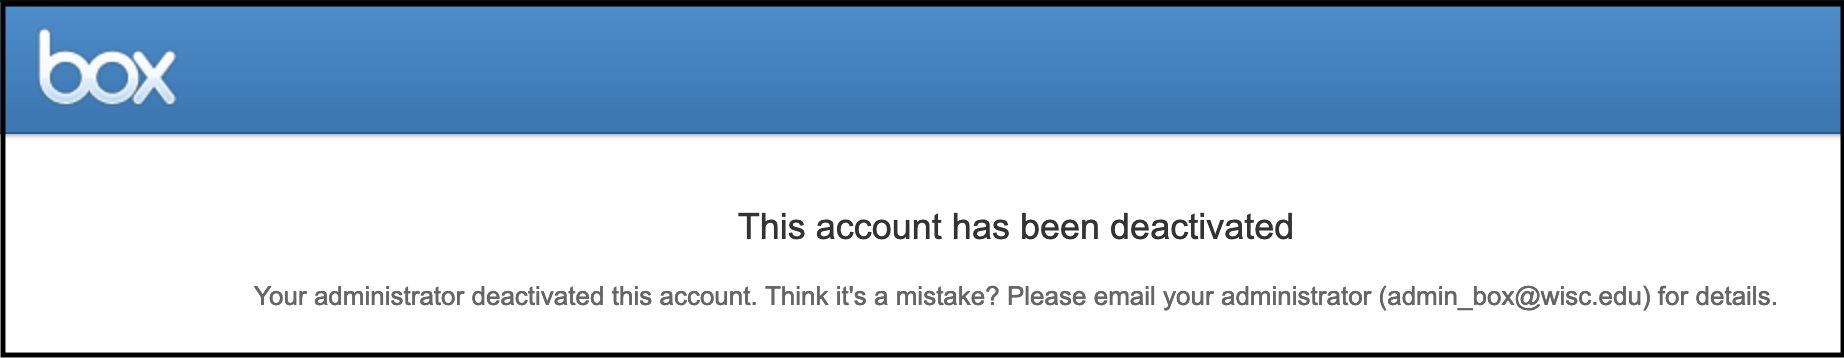 Screenshot of Box Account Deactivation Error message